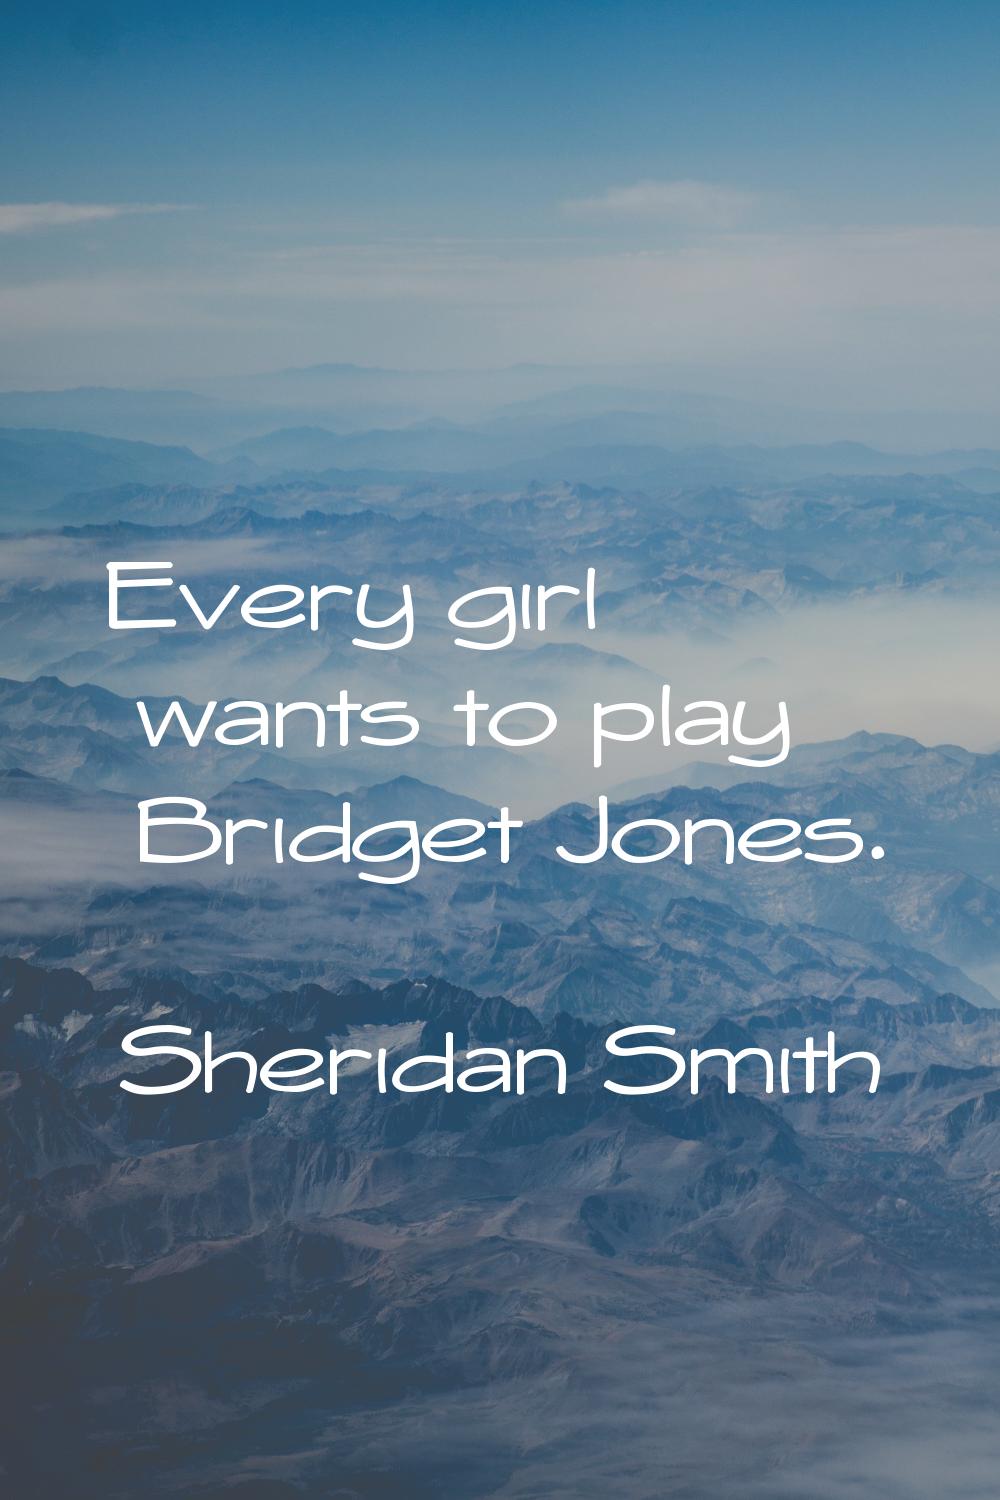 Every girl wants to play Bridget Jones.